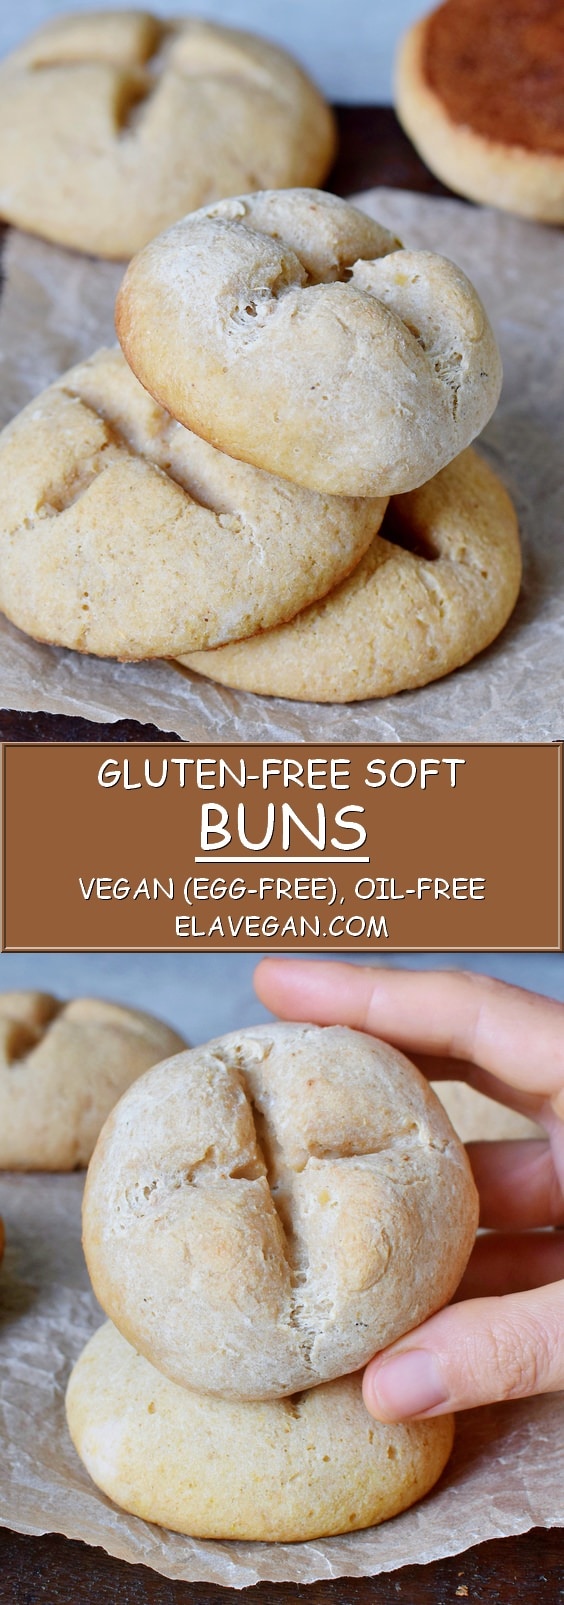 soft gluten-free buns (yeast bread rolls) vegan egg-free oil-free recipe for burger or sandwich